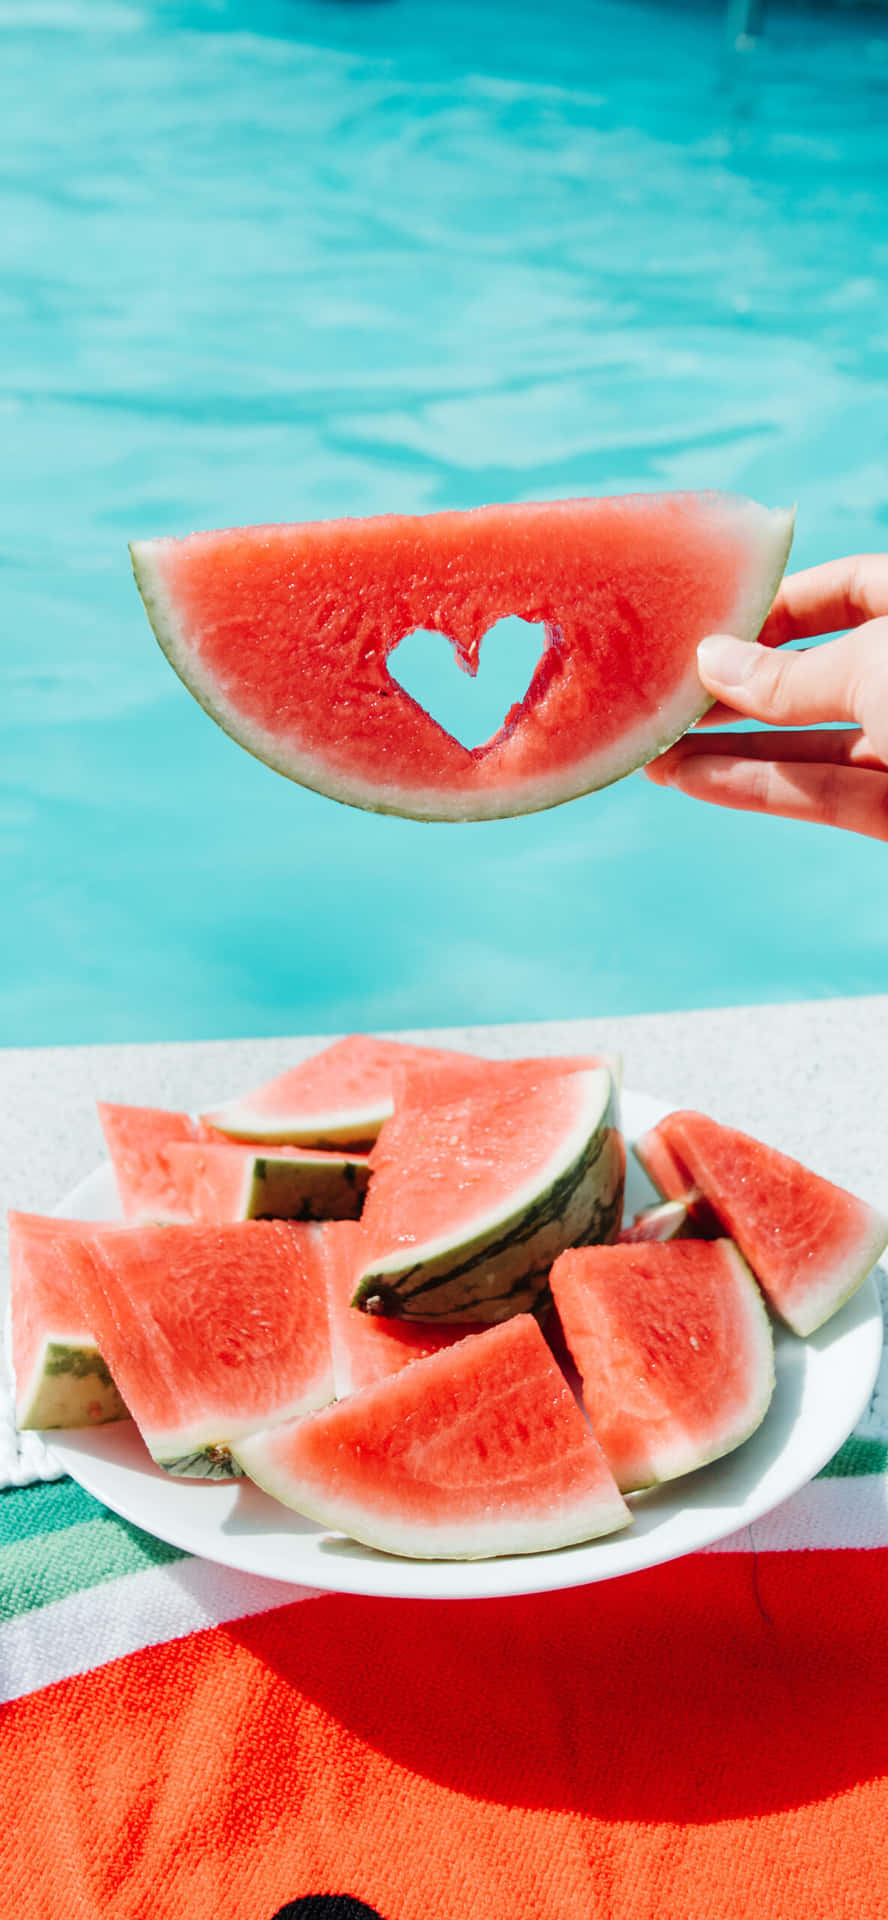 Summer Watermelon Background Images  Free Download on Freepik